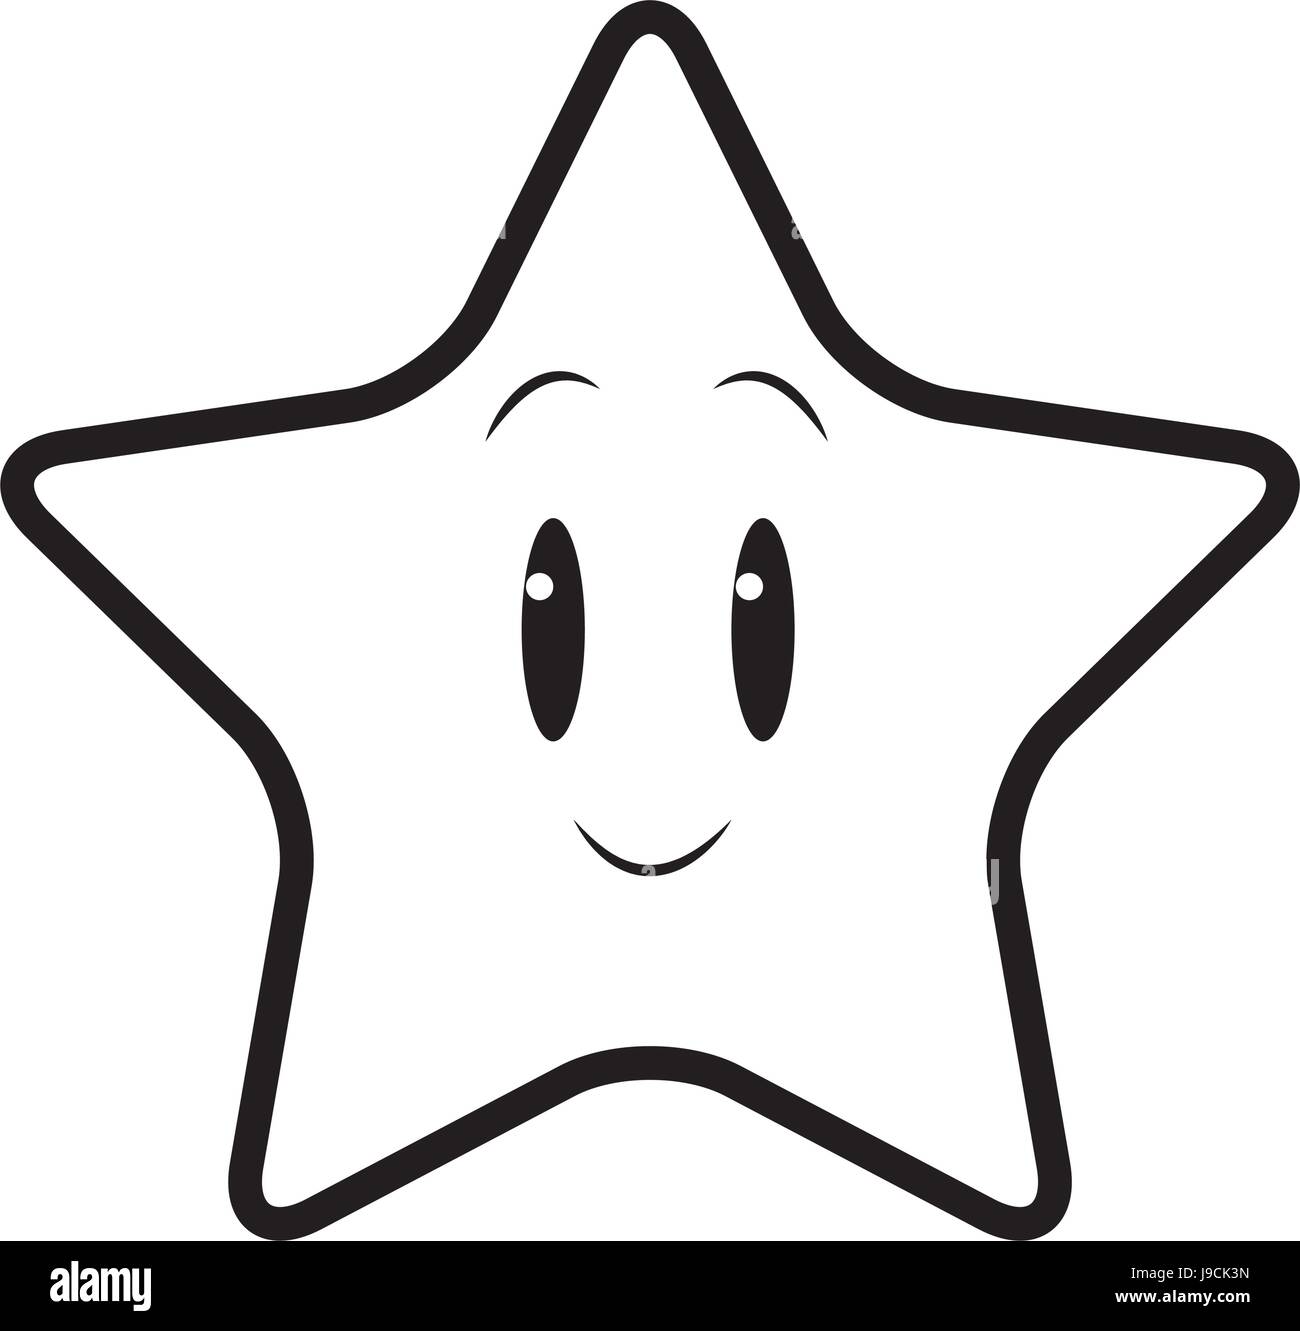 Cute Kawaii Sterne Gesicht Emoticon Charakter Stock-Vektorgrafik - Alamy